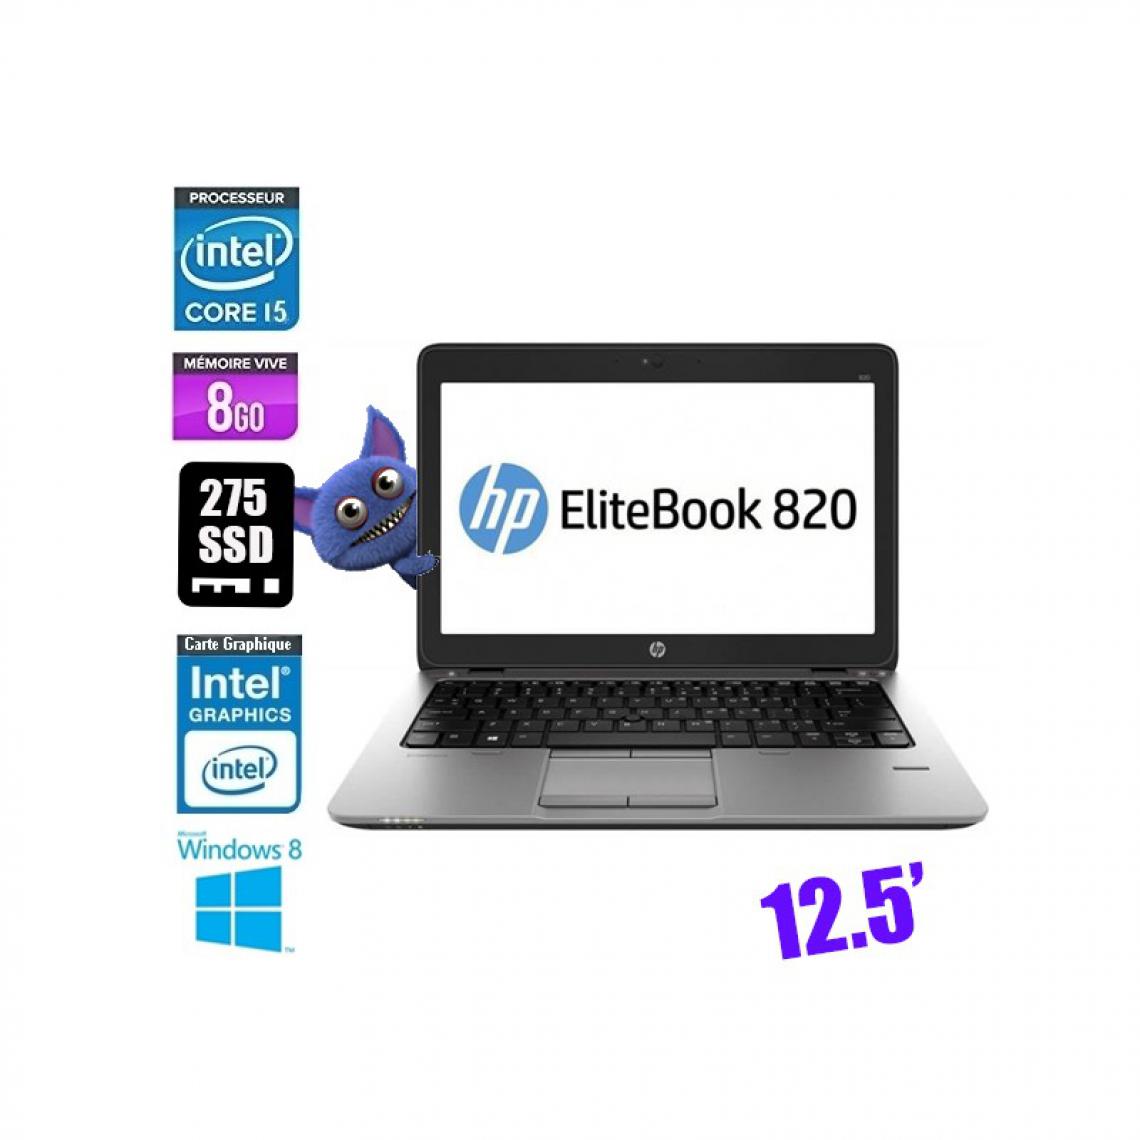 Hp - HP ELITEBOOK 820 G1 CORE I5 4310U 2.0GHZ - PC Portable